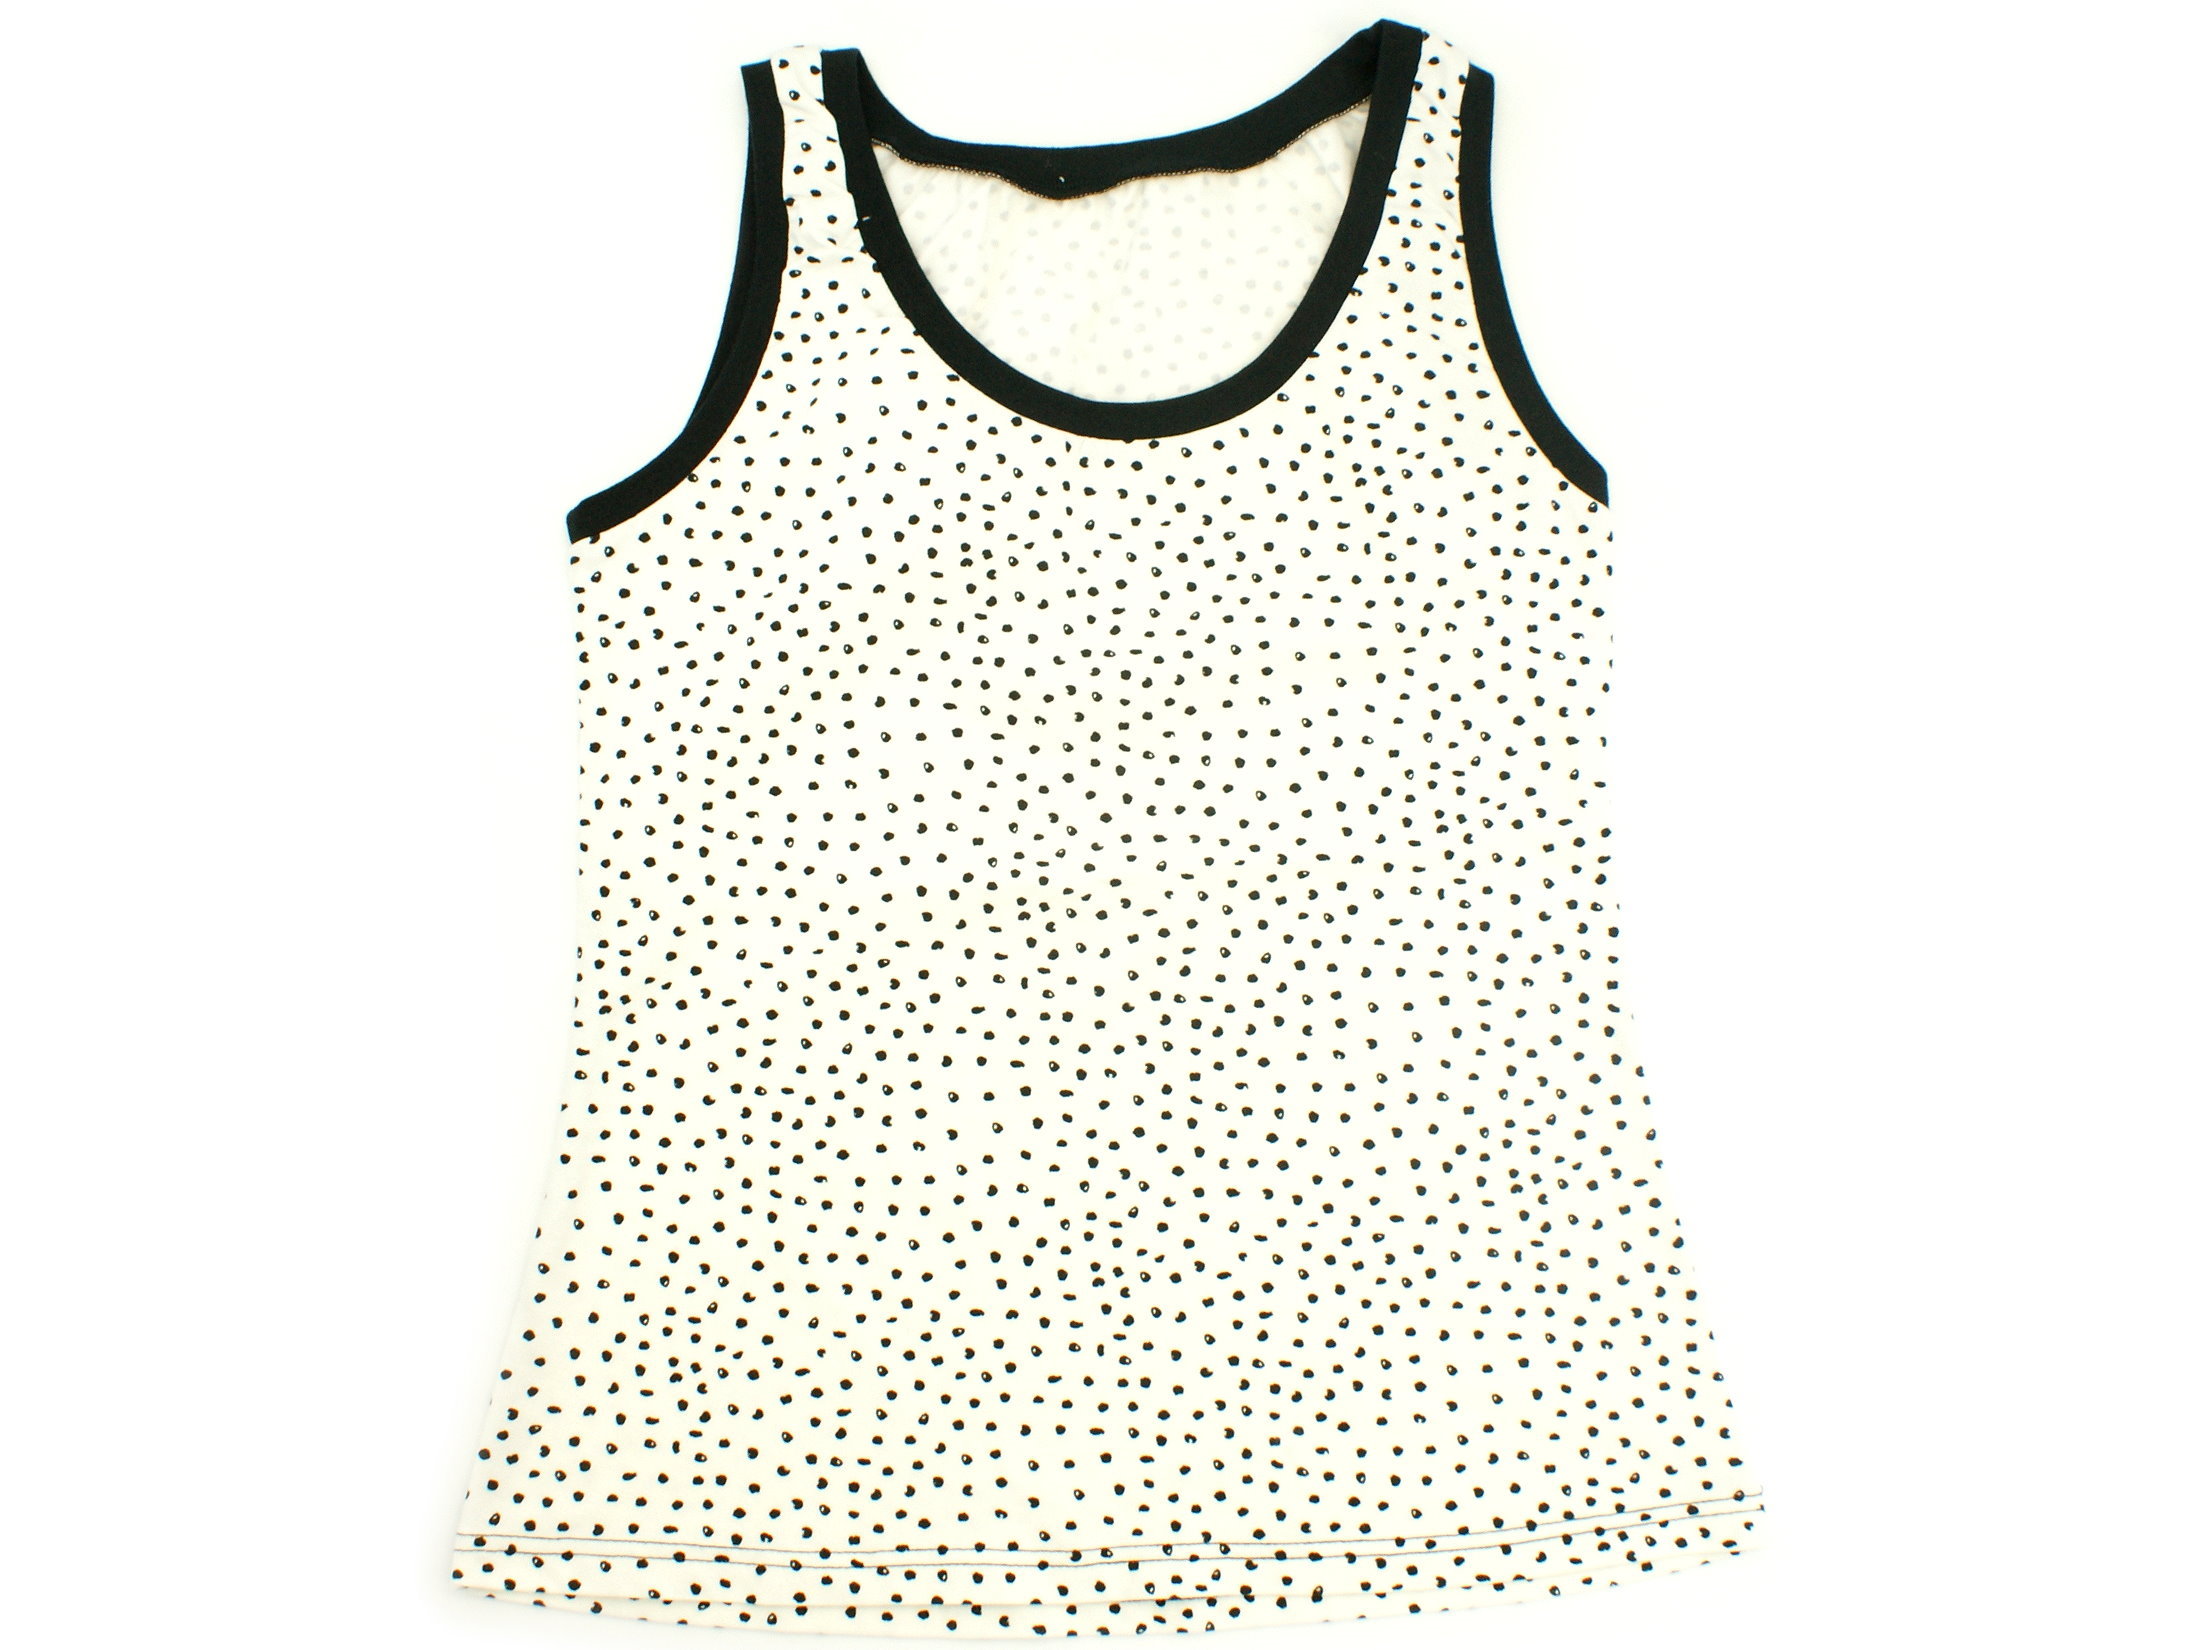 Damen Tanktop Shirt "Little Dots" creme schwarz 36/38